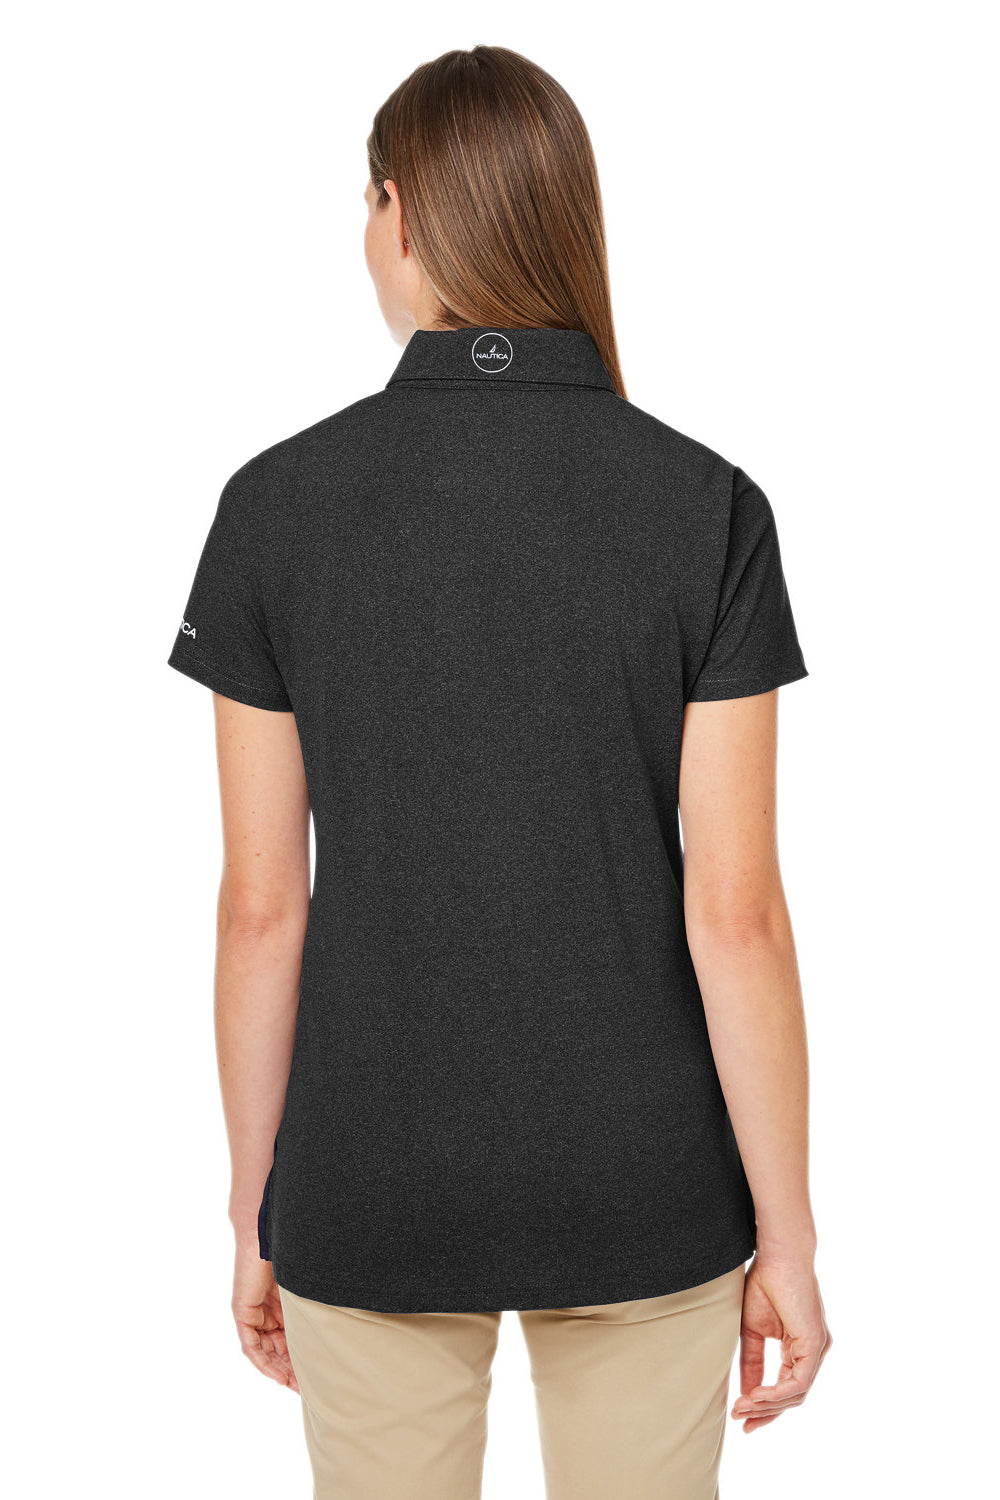 Nautica N17923 Womens Saltwater Short Sleeve Polo Shirt Onyx Black Back